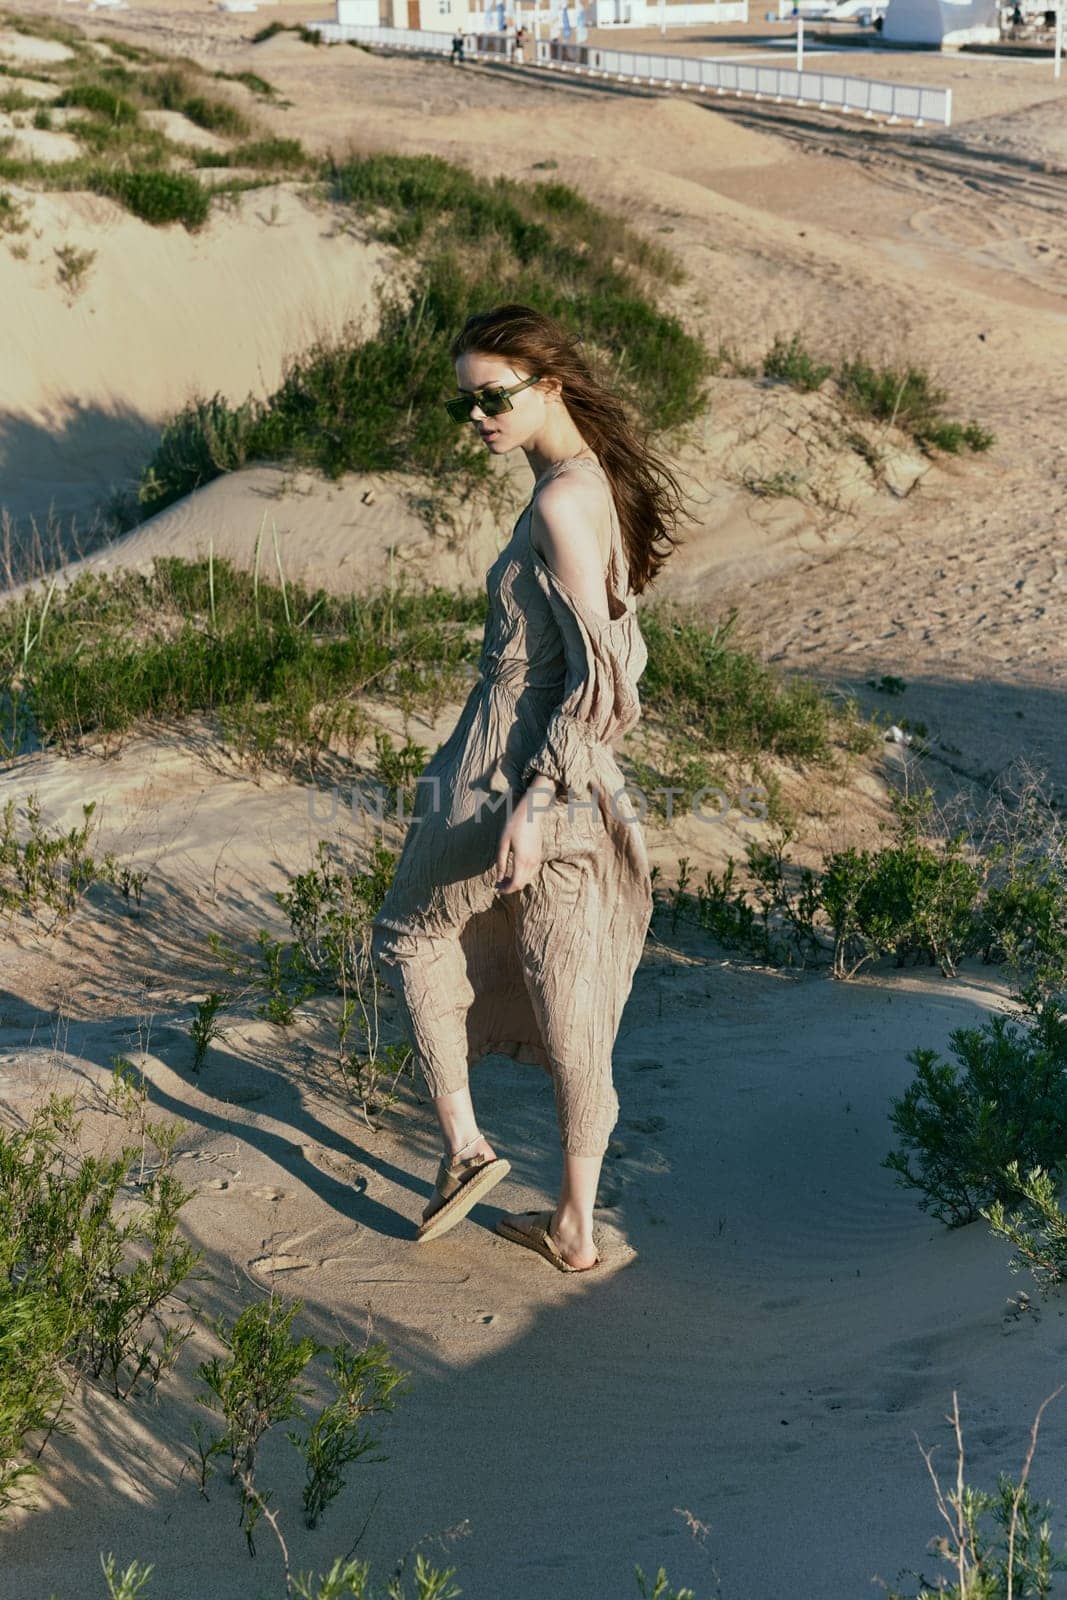 a slender woman in a long dress walks along a wild beach alone by Vichizh